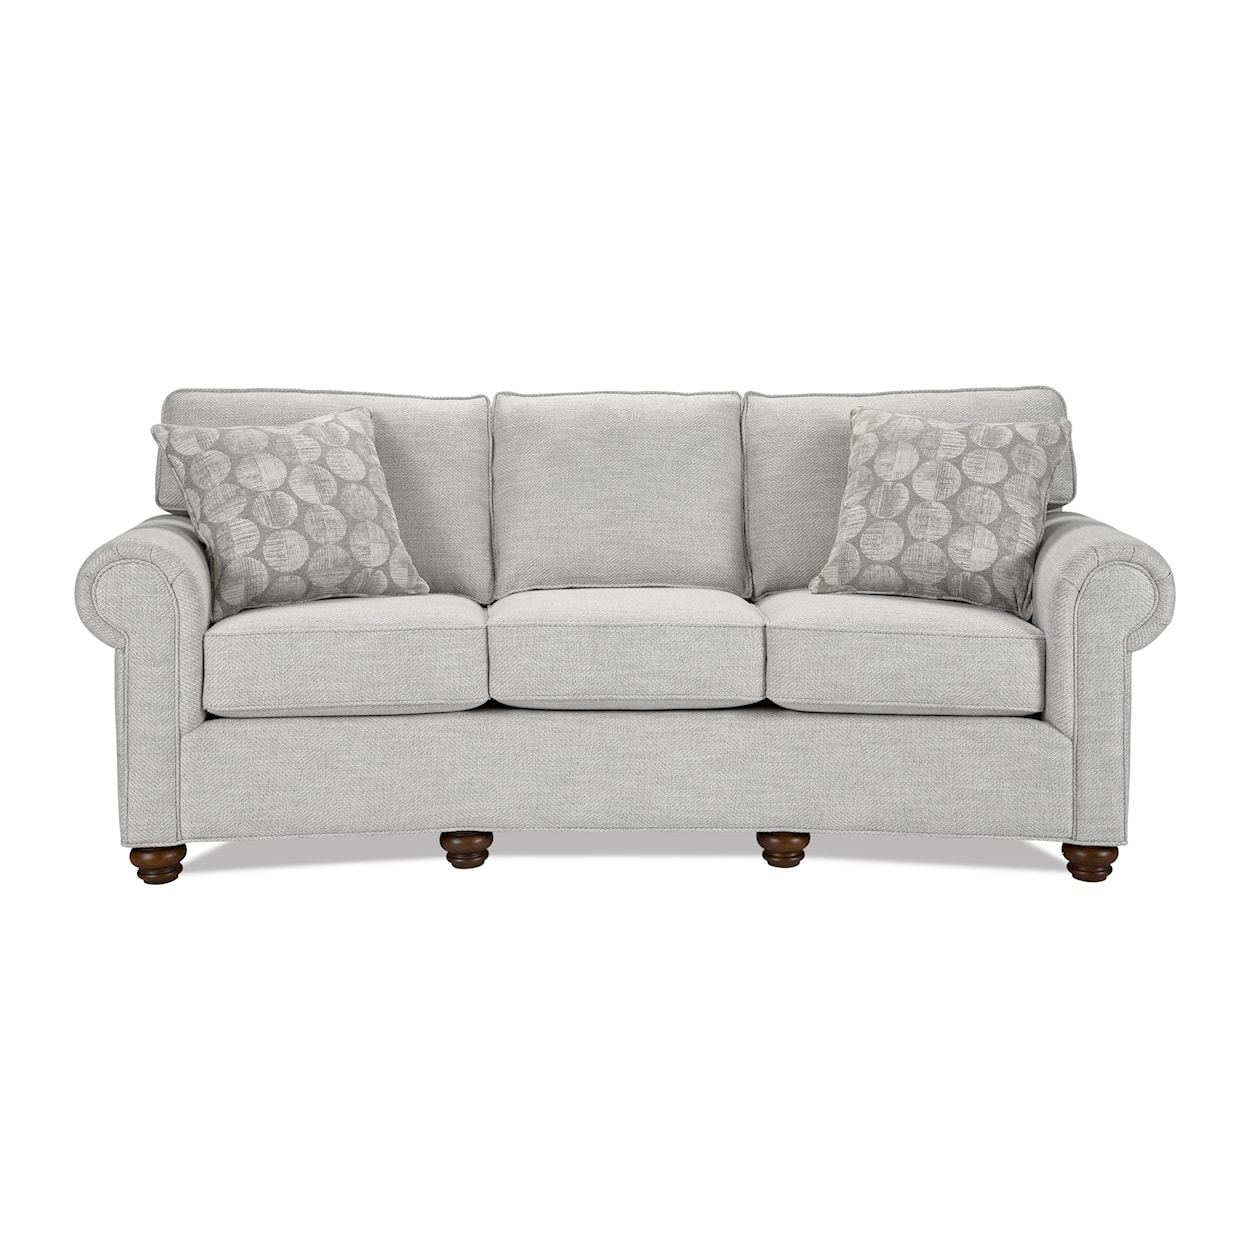 Lancer 950 3-Seat Conversation Sofa